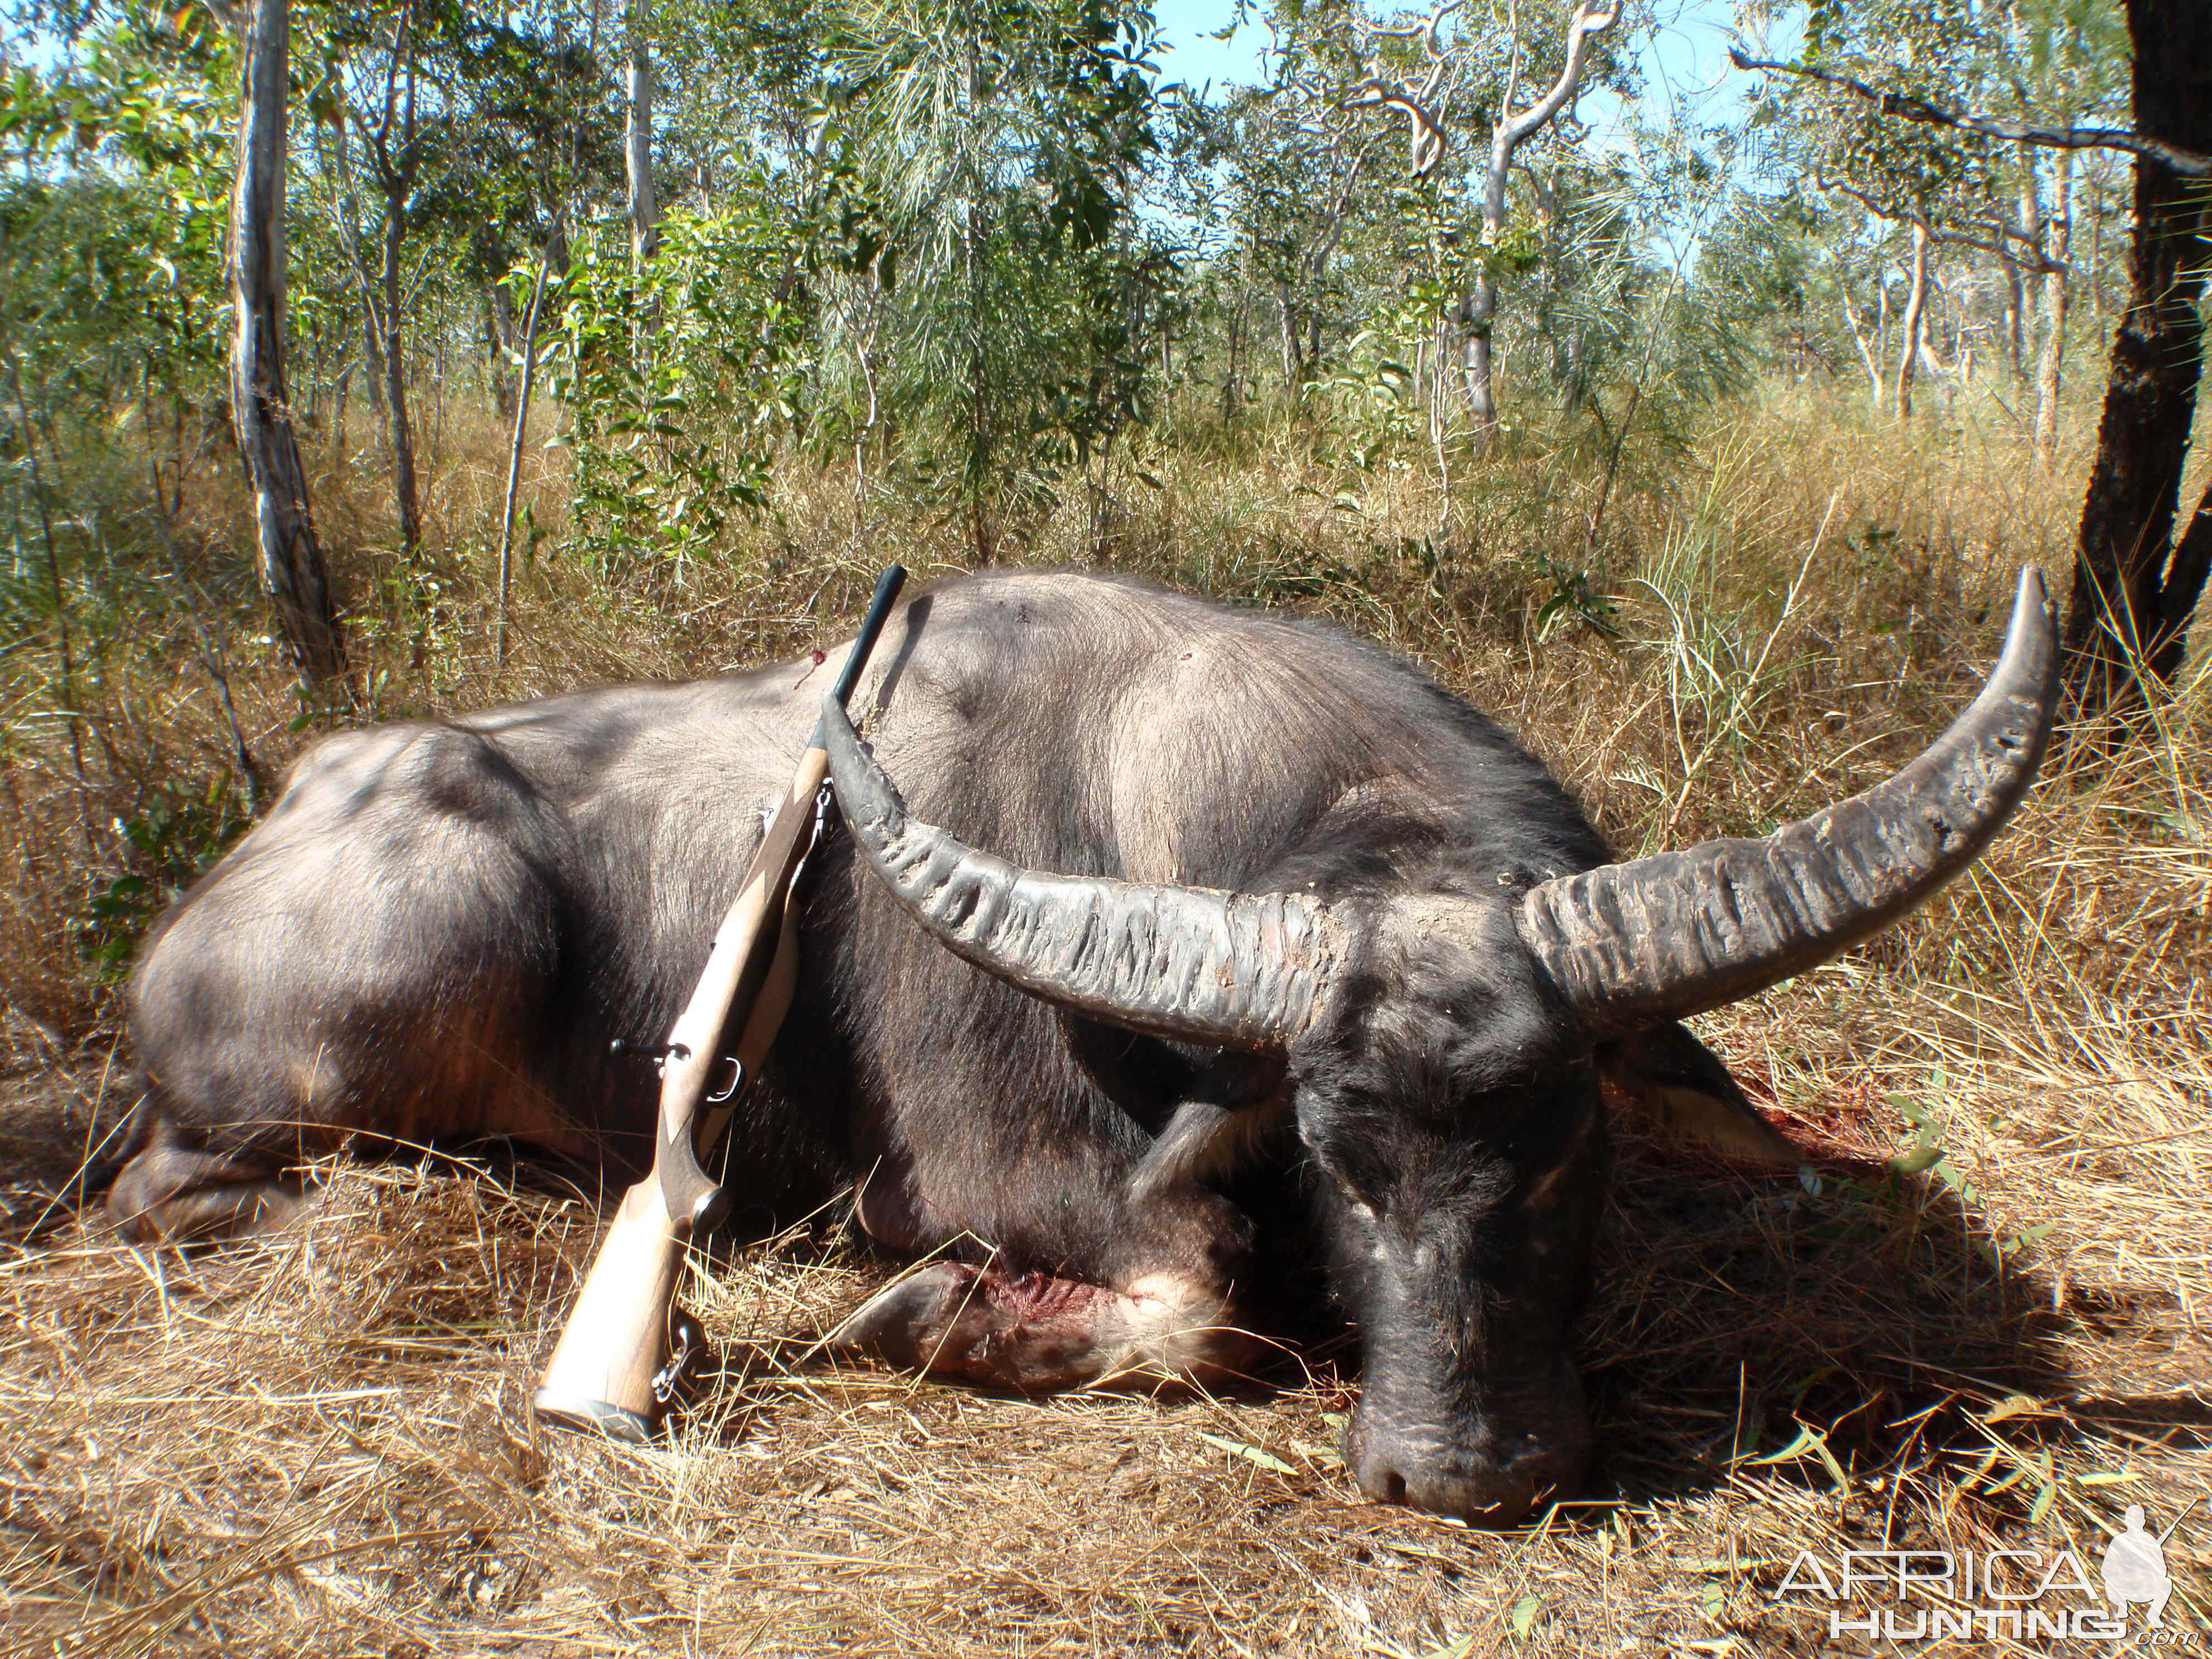 Asiatic Hunting Australia AfricaHunting.com